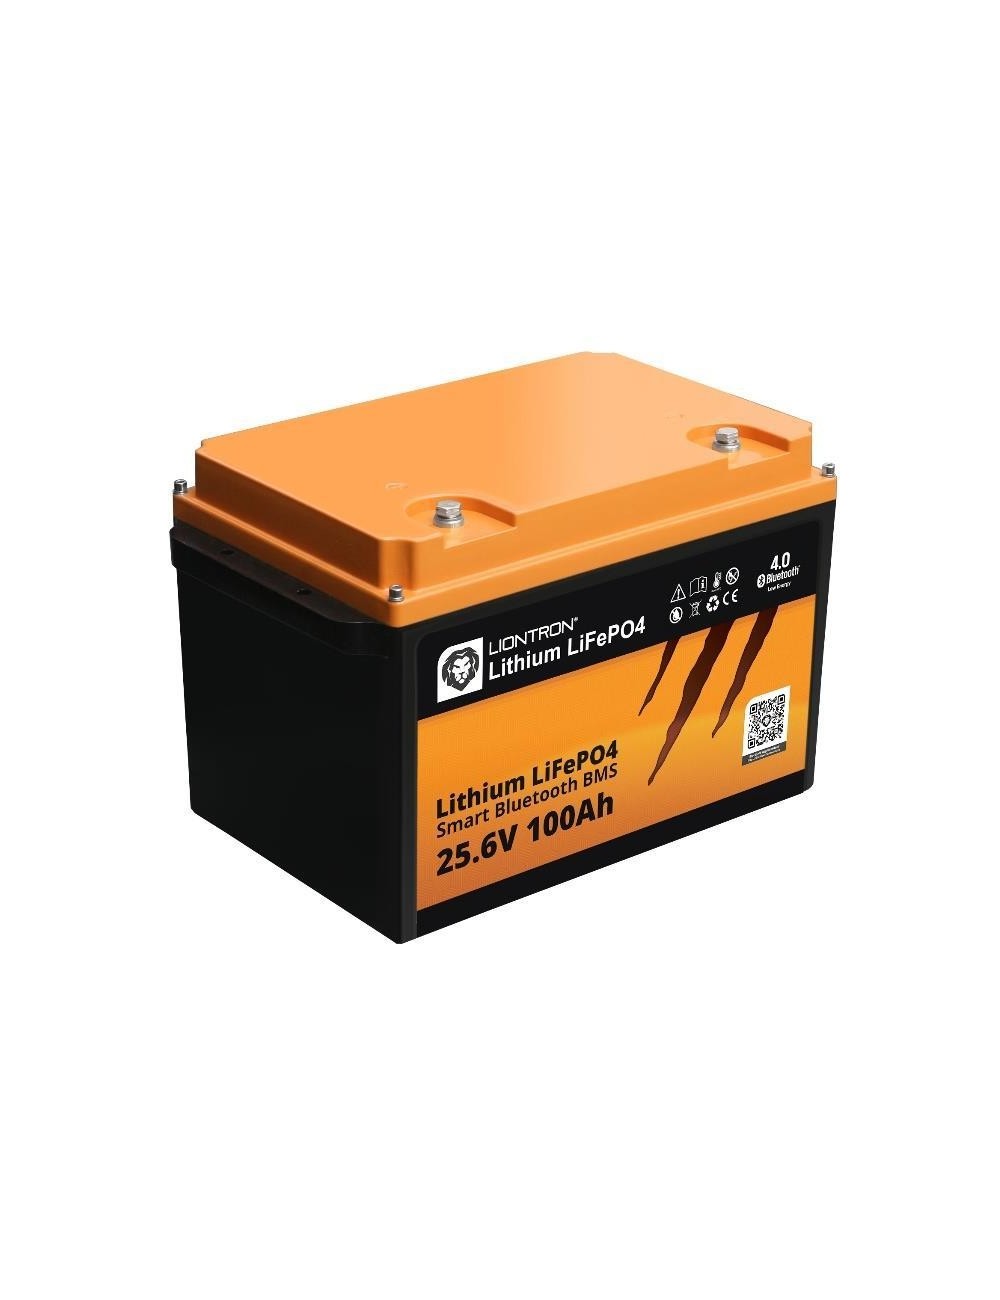 LiFePO4 battery 24V 100Ah LionTron